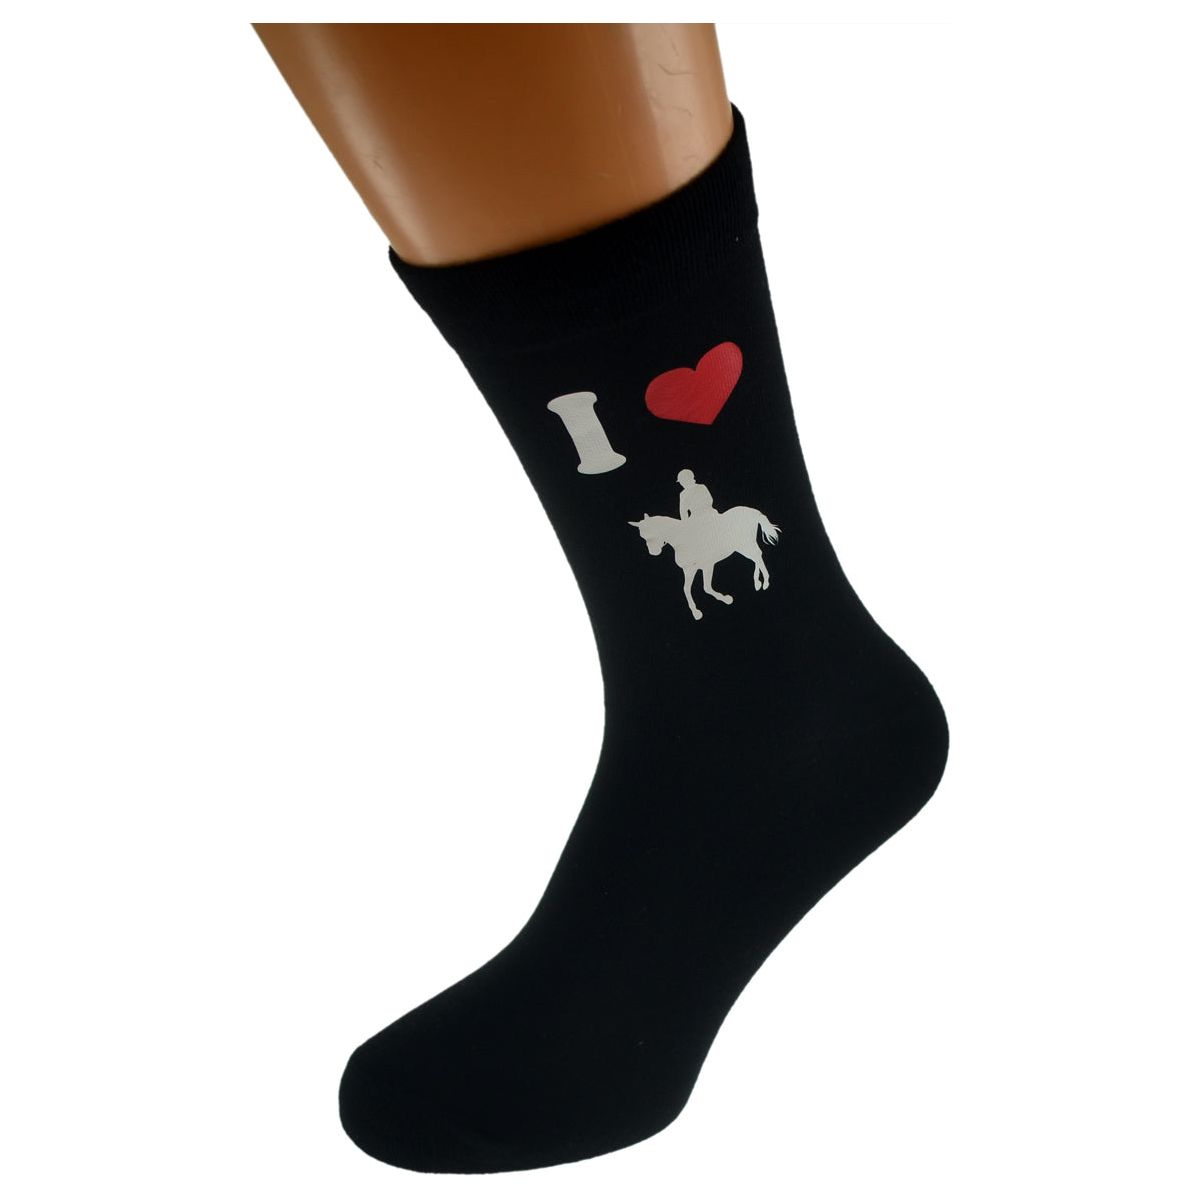 I Love horse riding Equestrian Image Design Mens Black Socks - Ashton and Finch